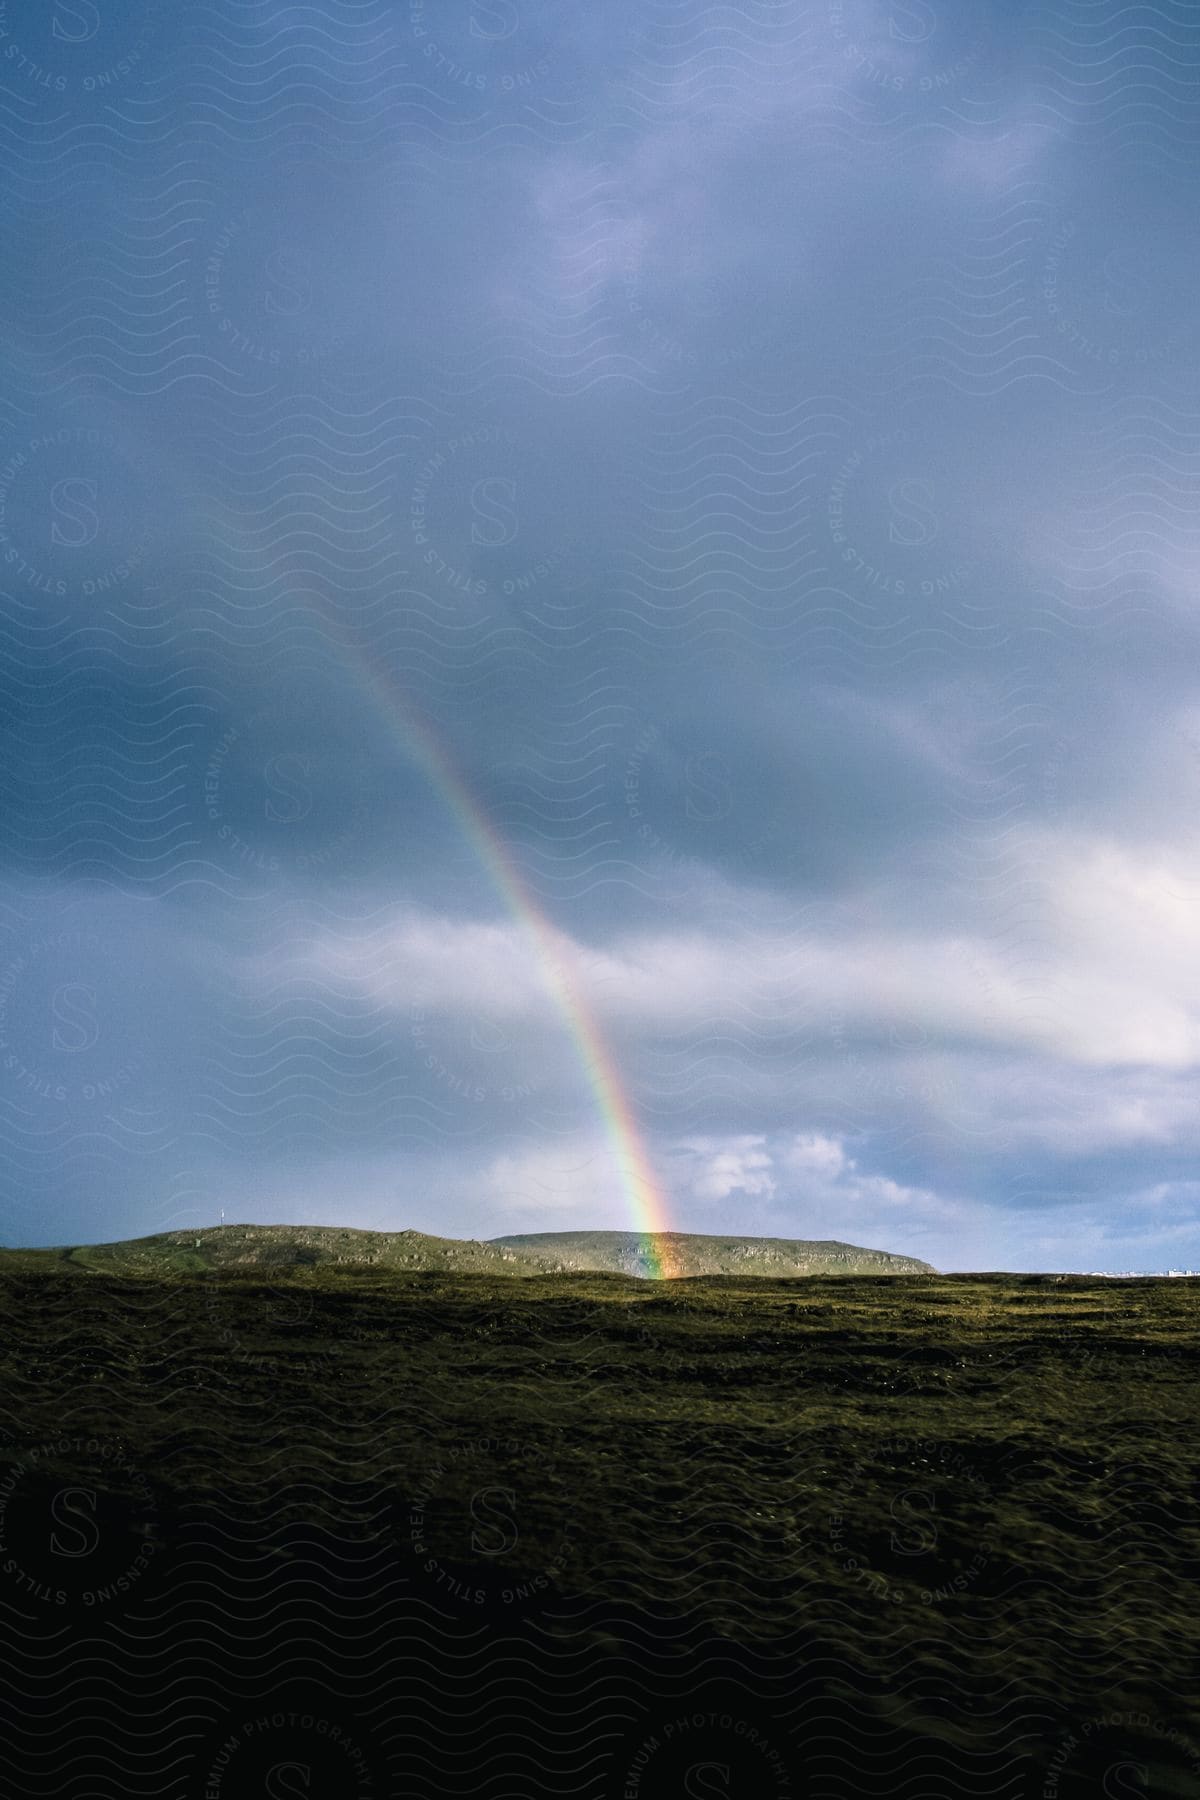 A rainbow over grasslands